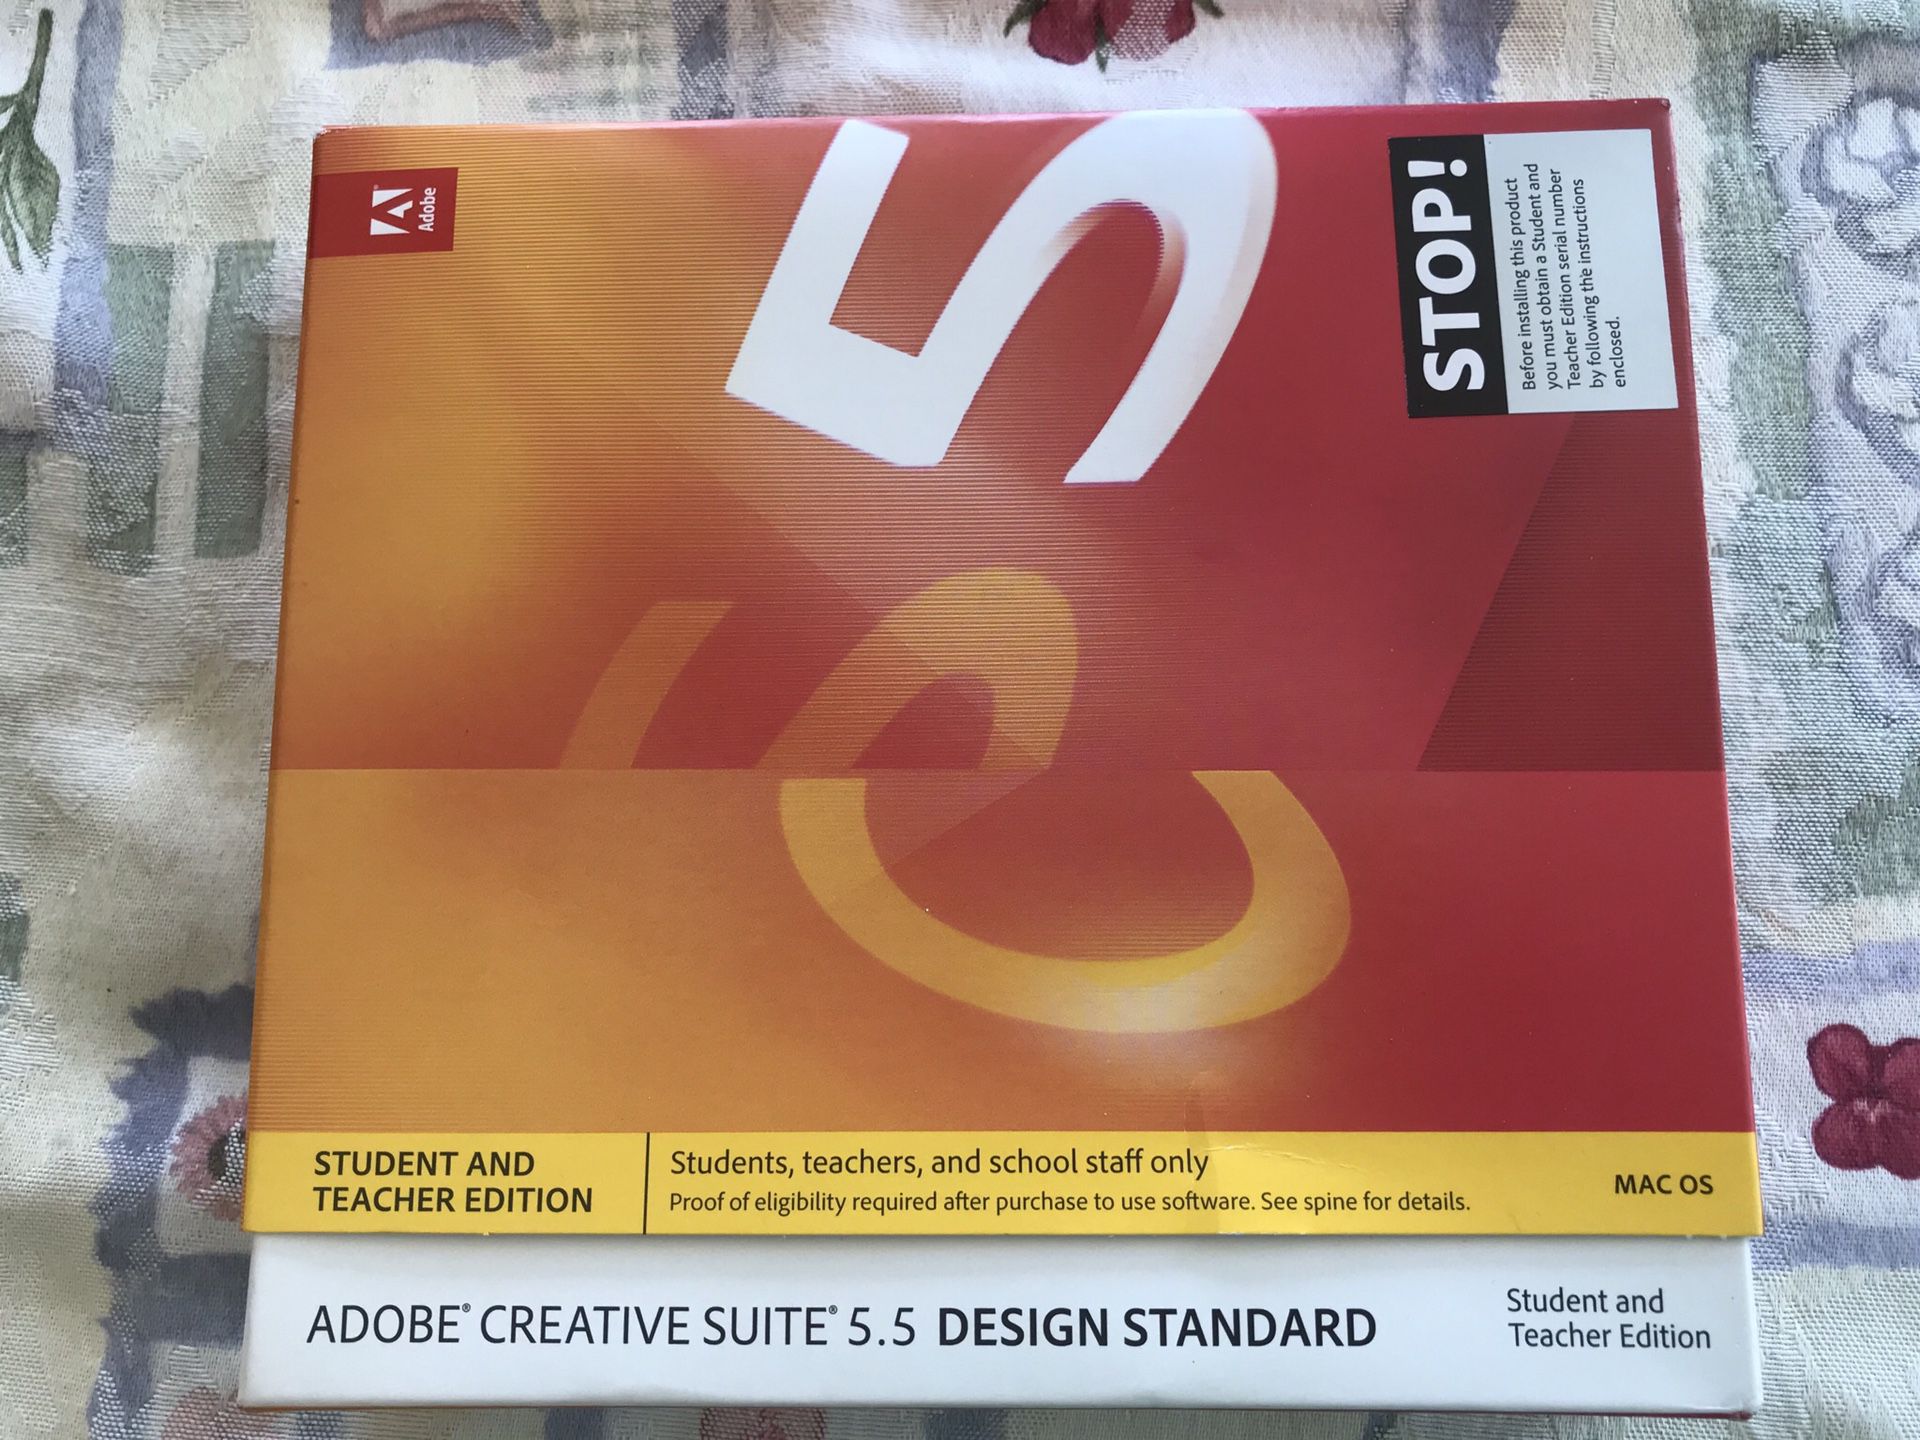 Adobe creative suite 5.5 design standard.